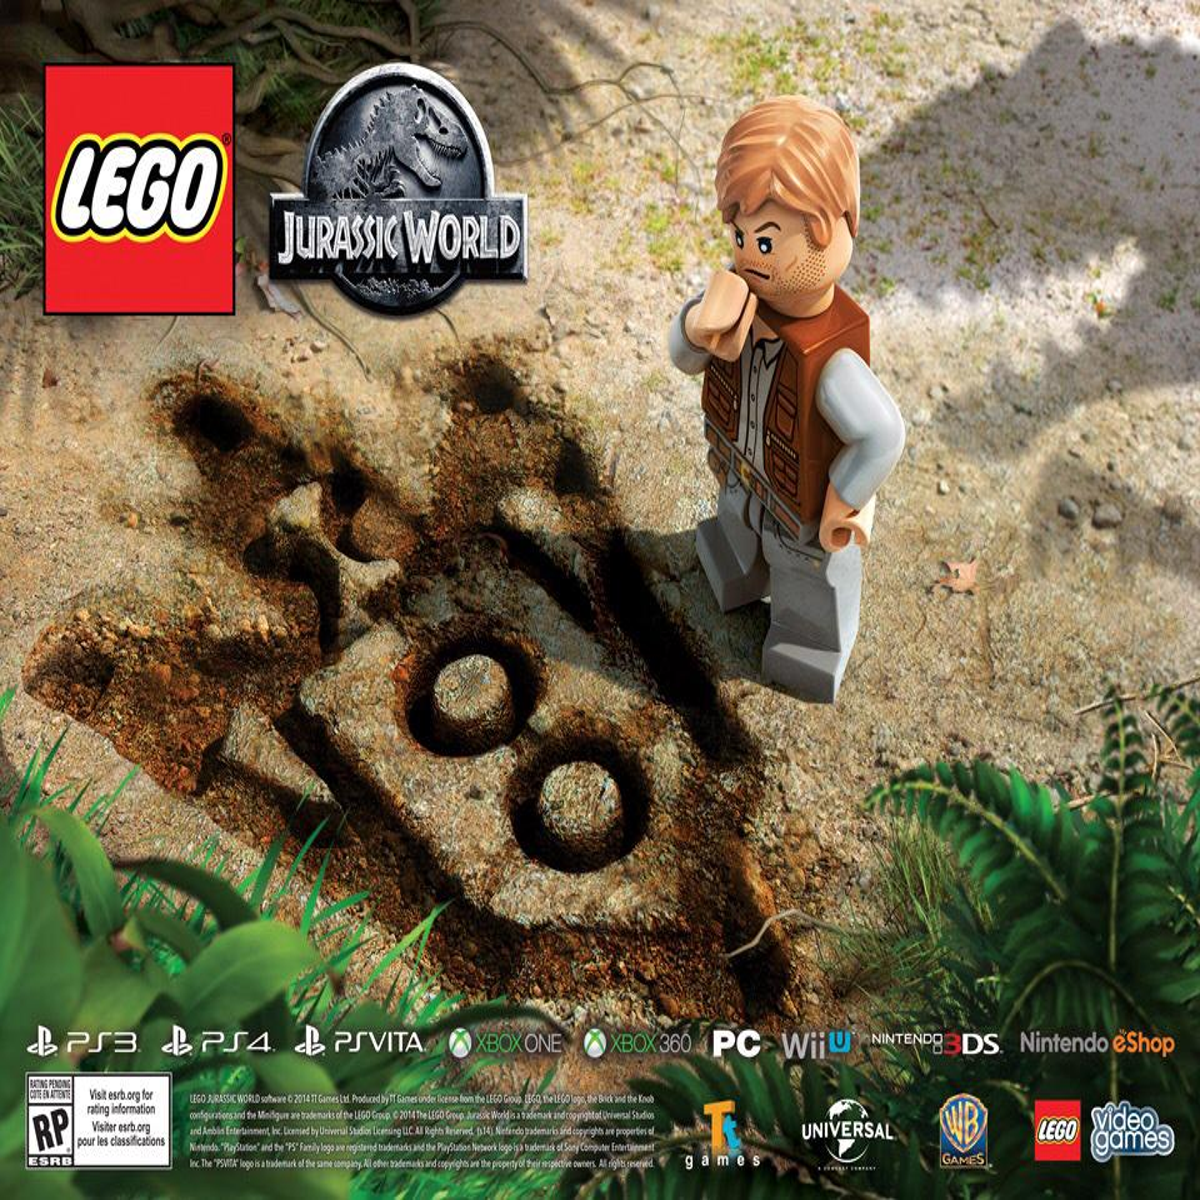 LEGO Jurassic World ANDROID JOGO COMPLETO 